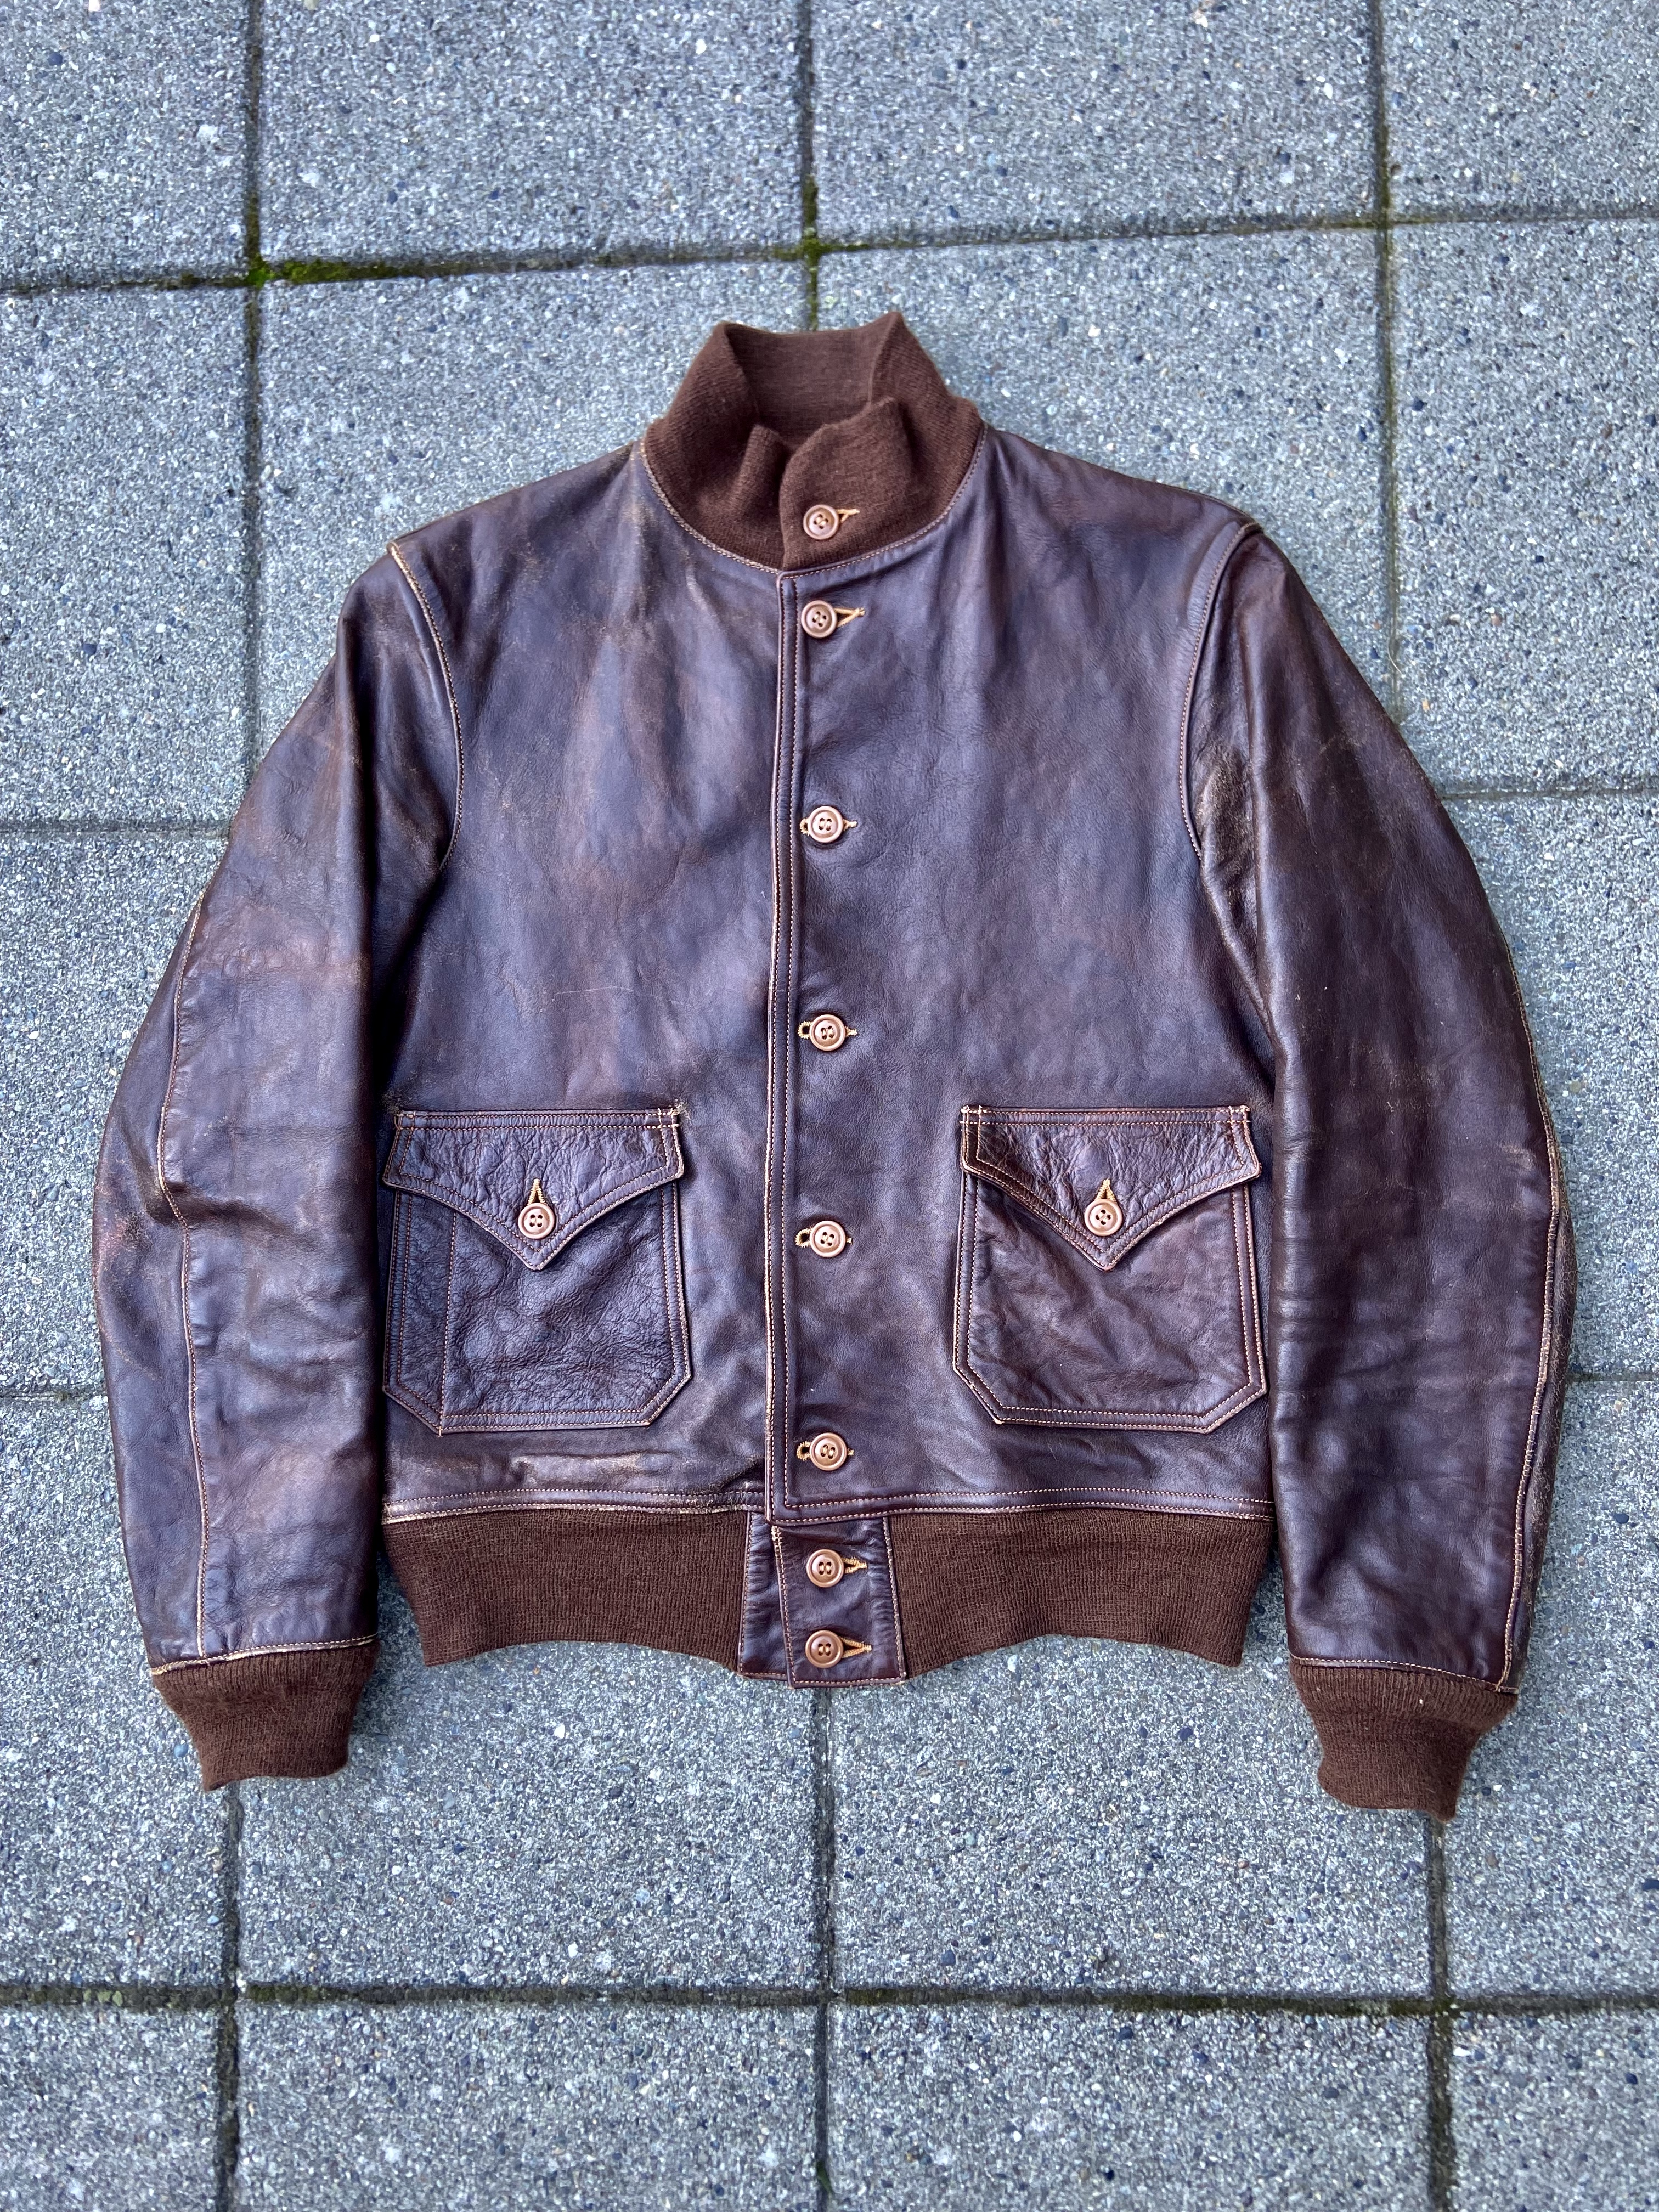 Freewheelers A-1 Jacket Tatanka Brown Horsehide Leather Shinki 